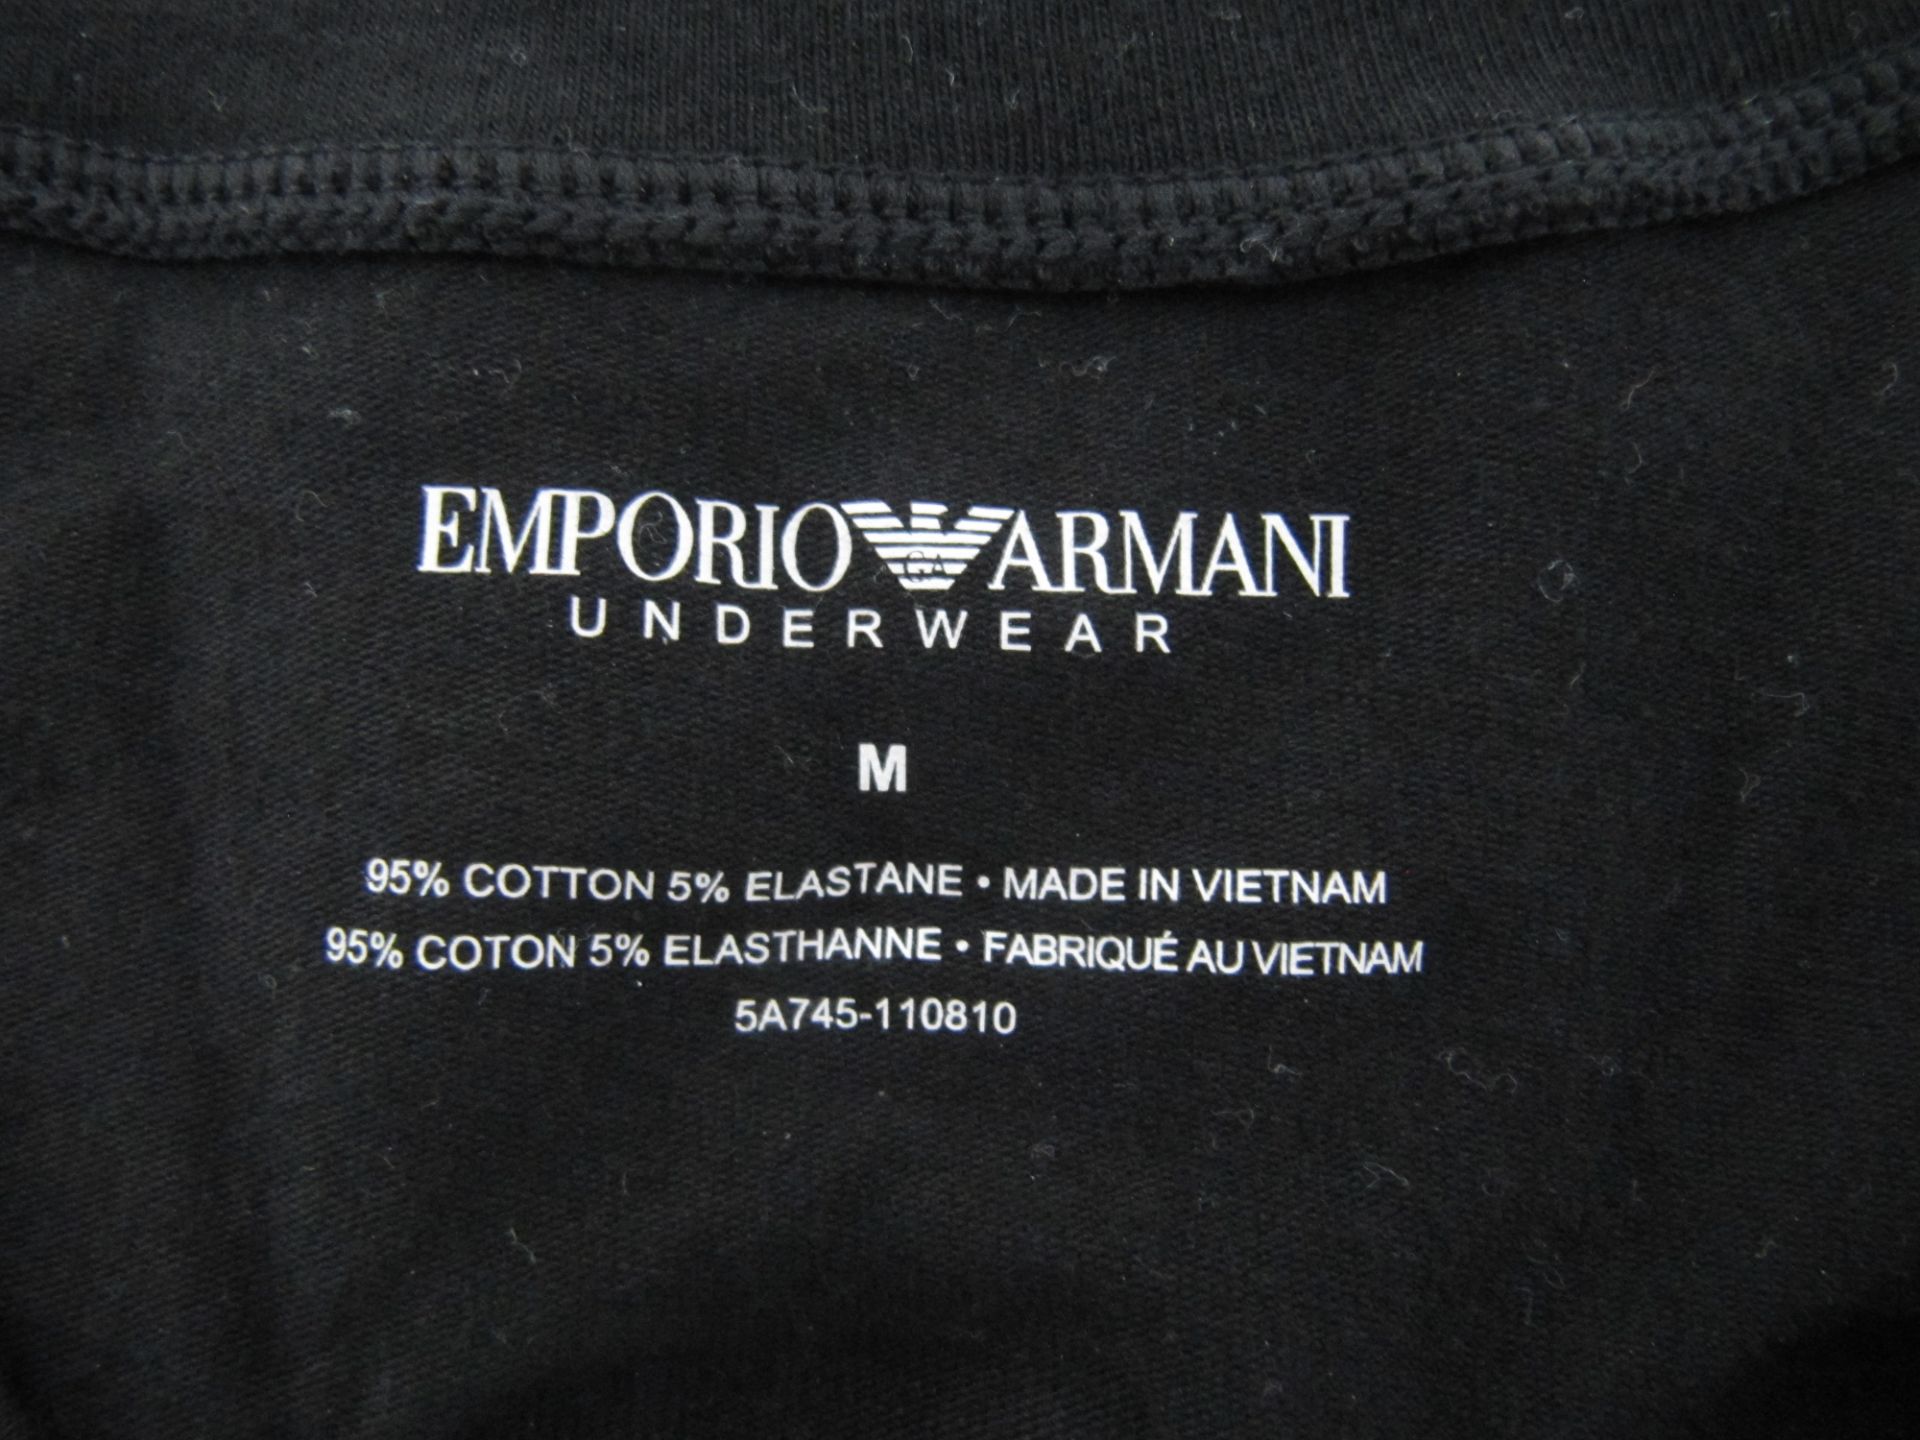 2 x Emporio Armani V neck Tee Shirt. - Image 4 of 6